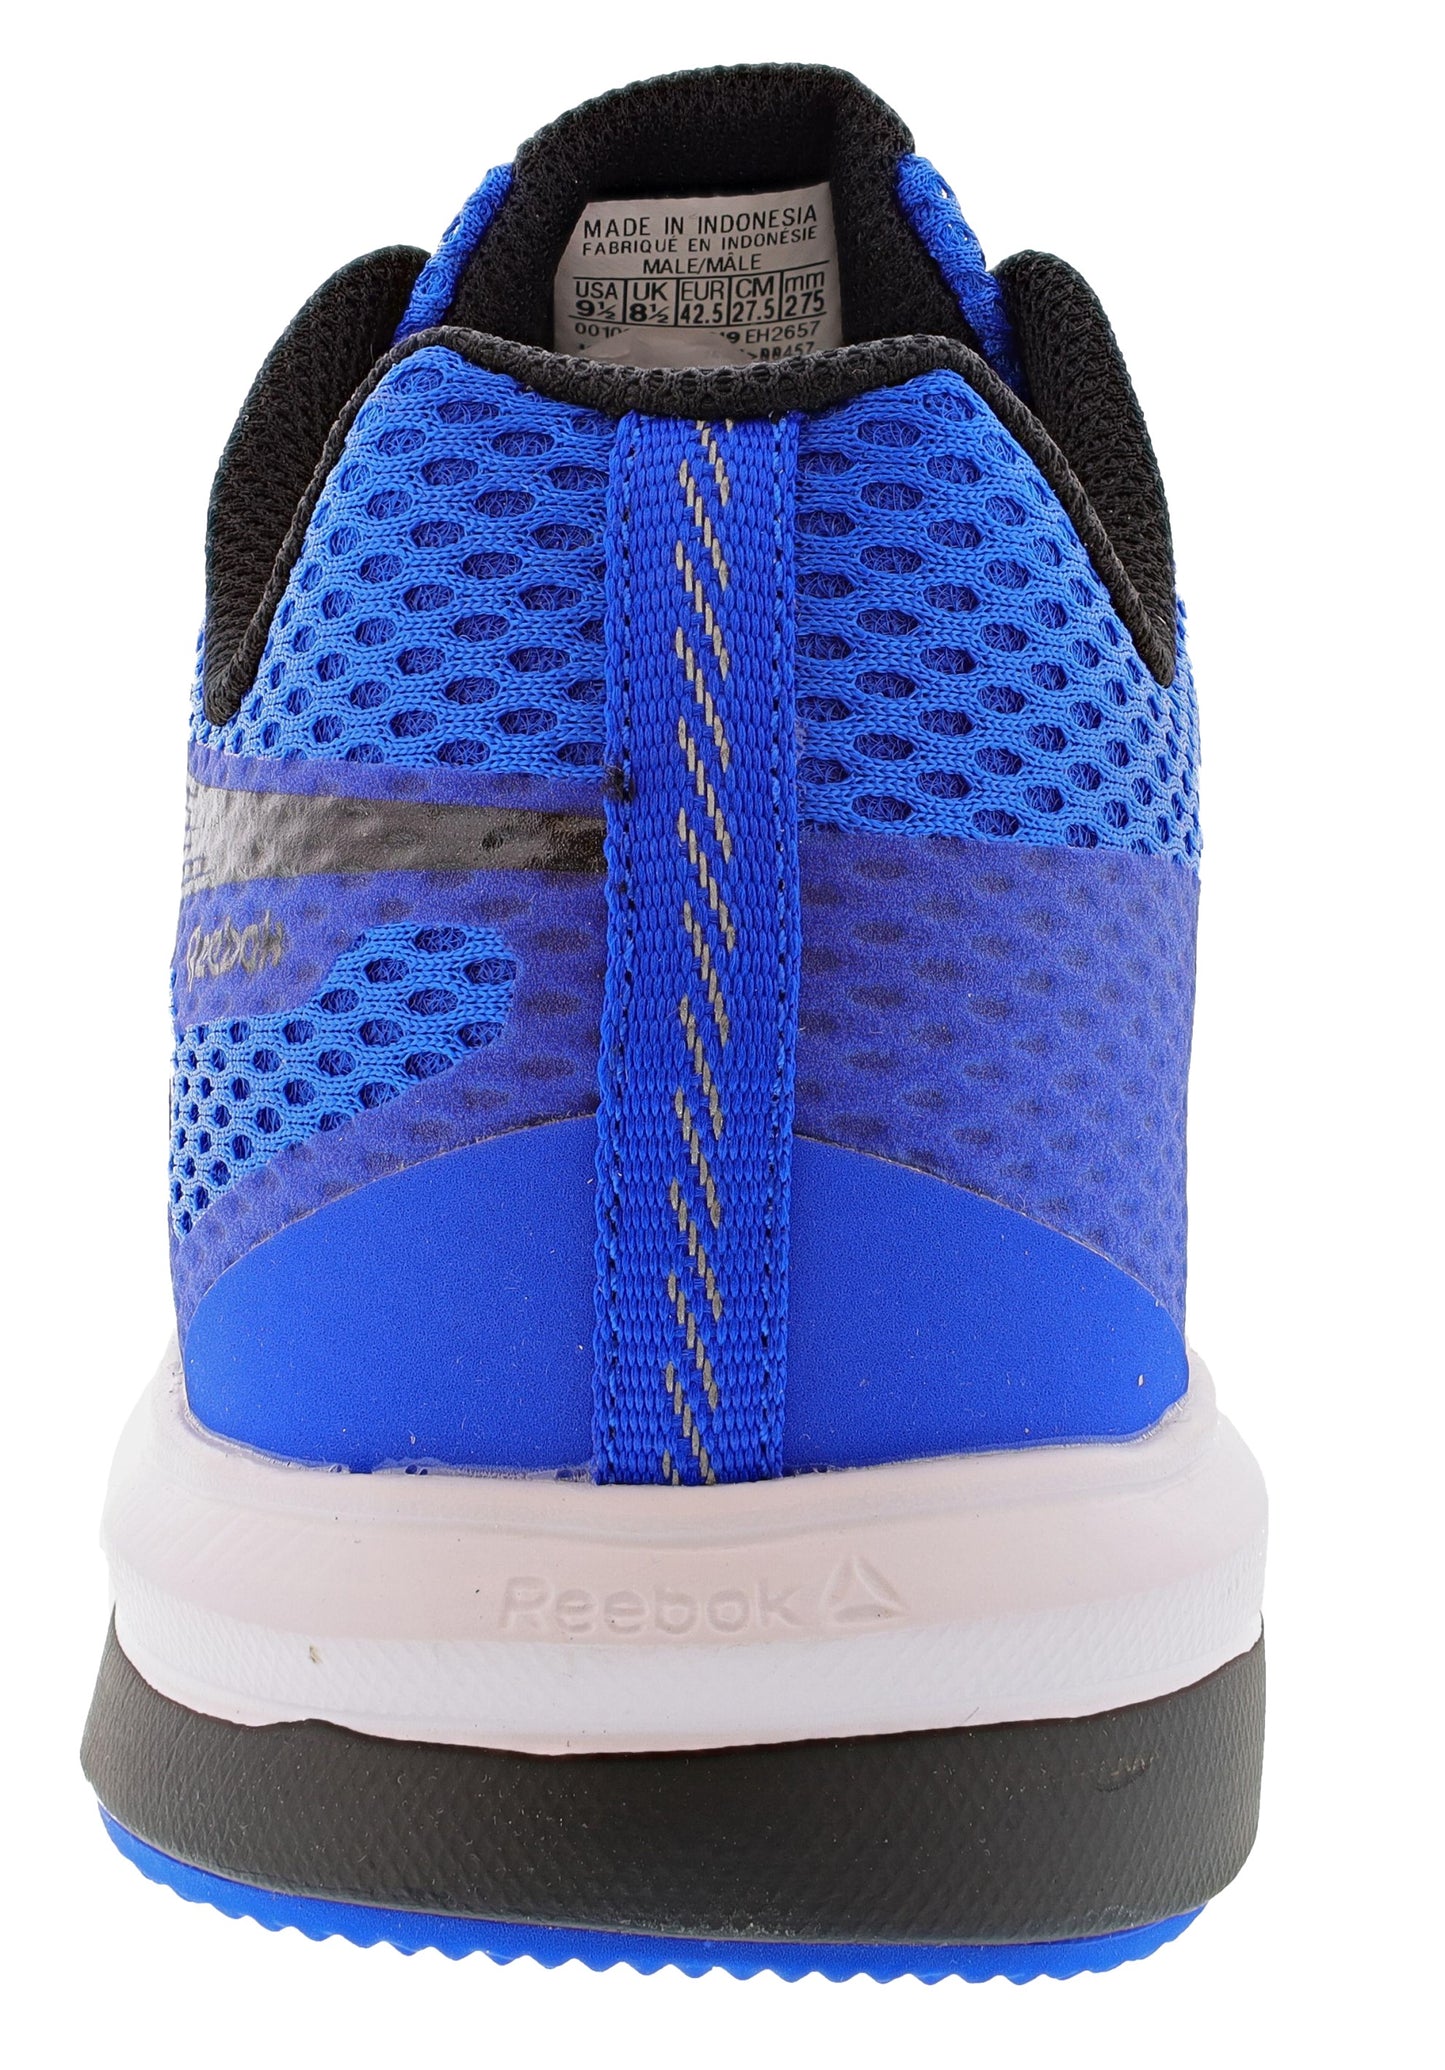 
                  
                    Reebok Men's Endless Road 2.0 Premier Comfort Running Shoes
                  
                